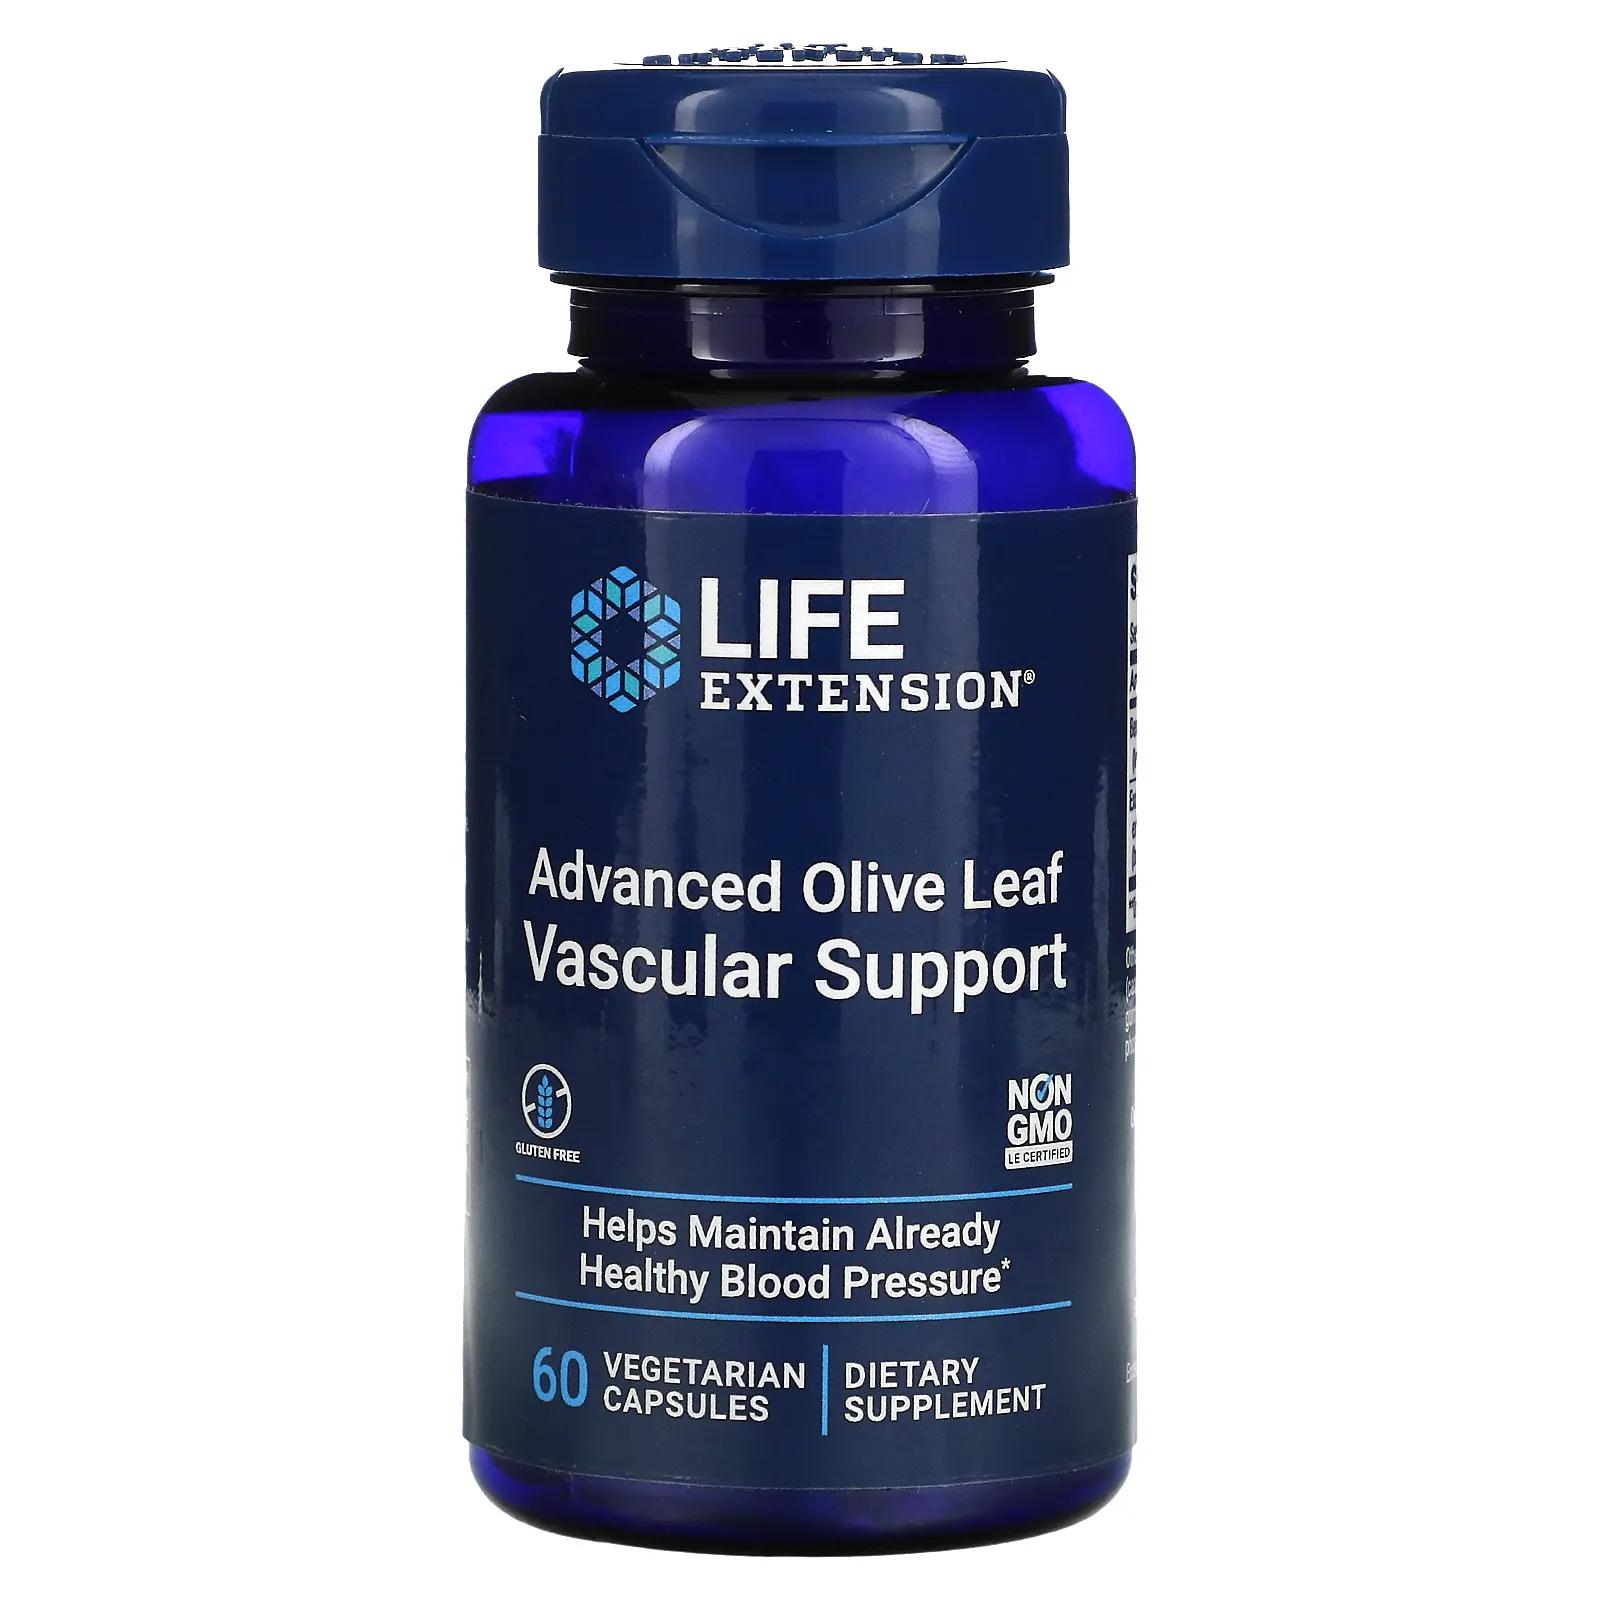 продление жизни супер мирафорте со стандартами life extension Life Extension Advanced Olive Leaf Vascular Support with Celery Seed Extract 60 Veggie Caps